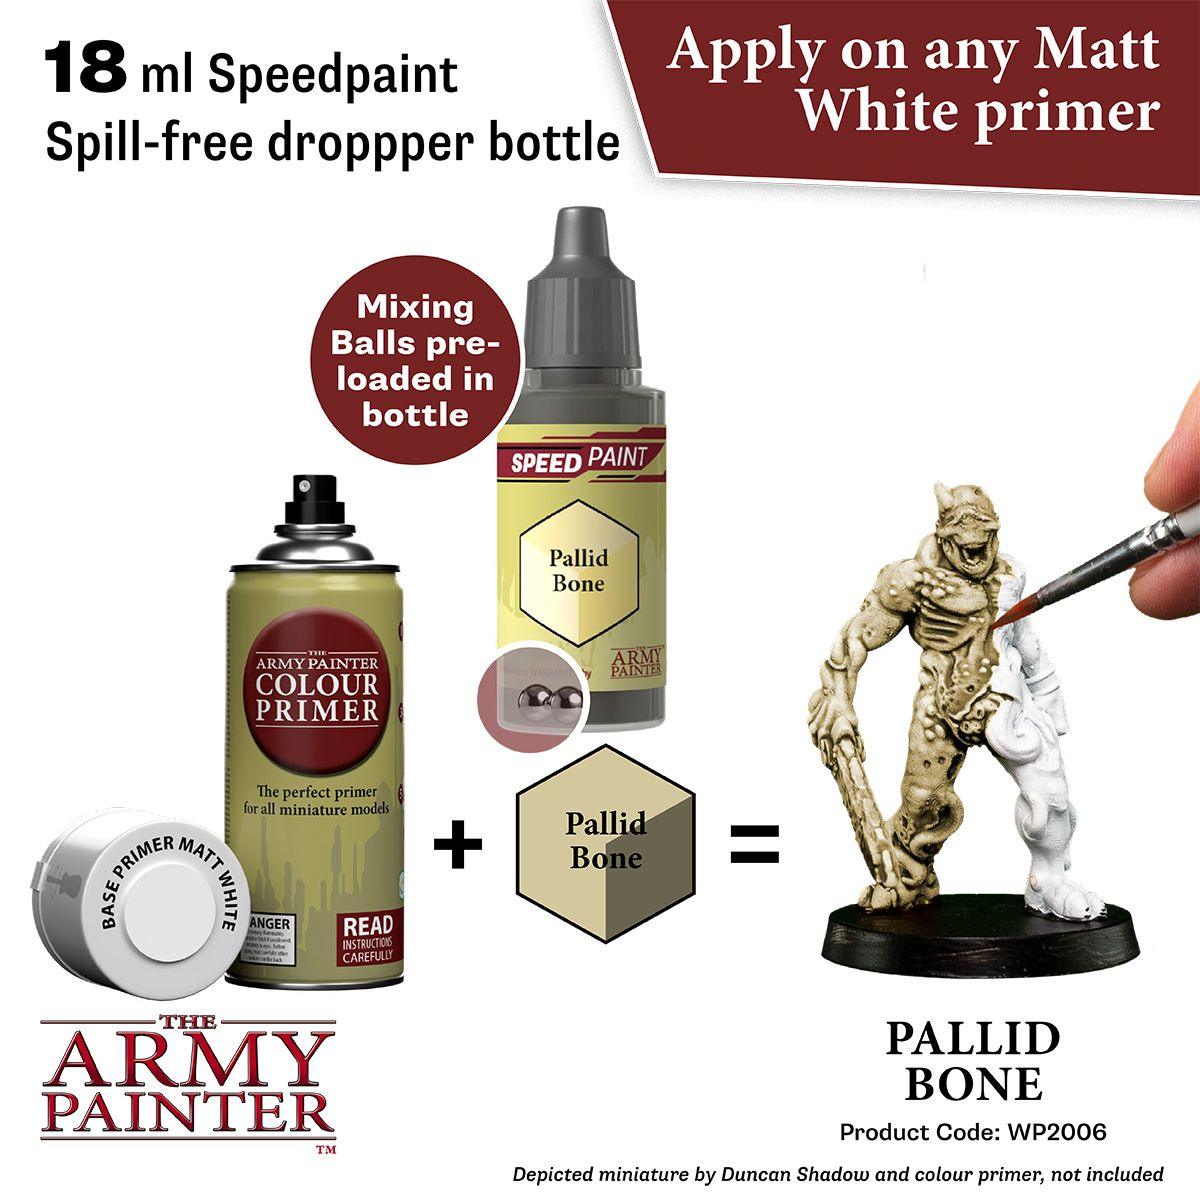 SP Pallid Bone Speedpaint Army Painter WP2006